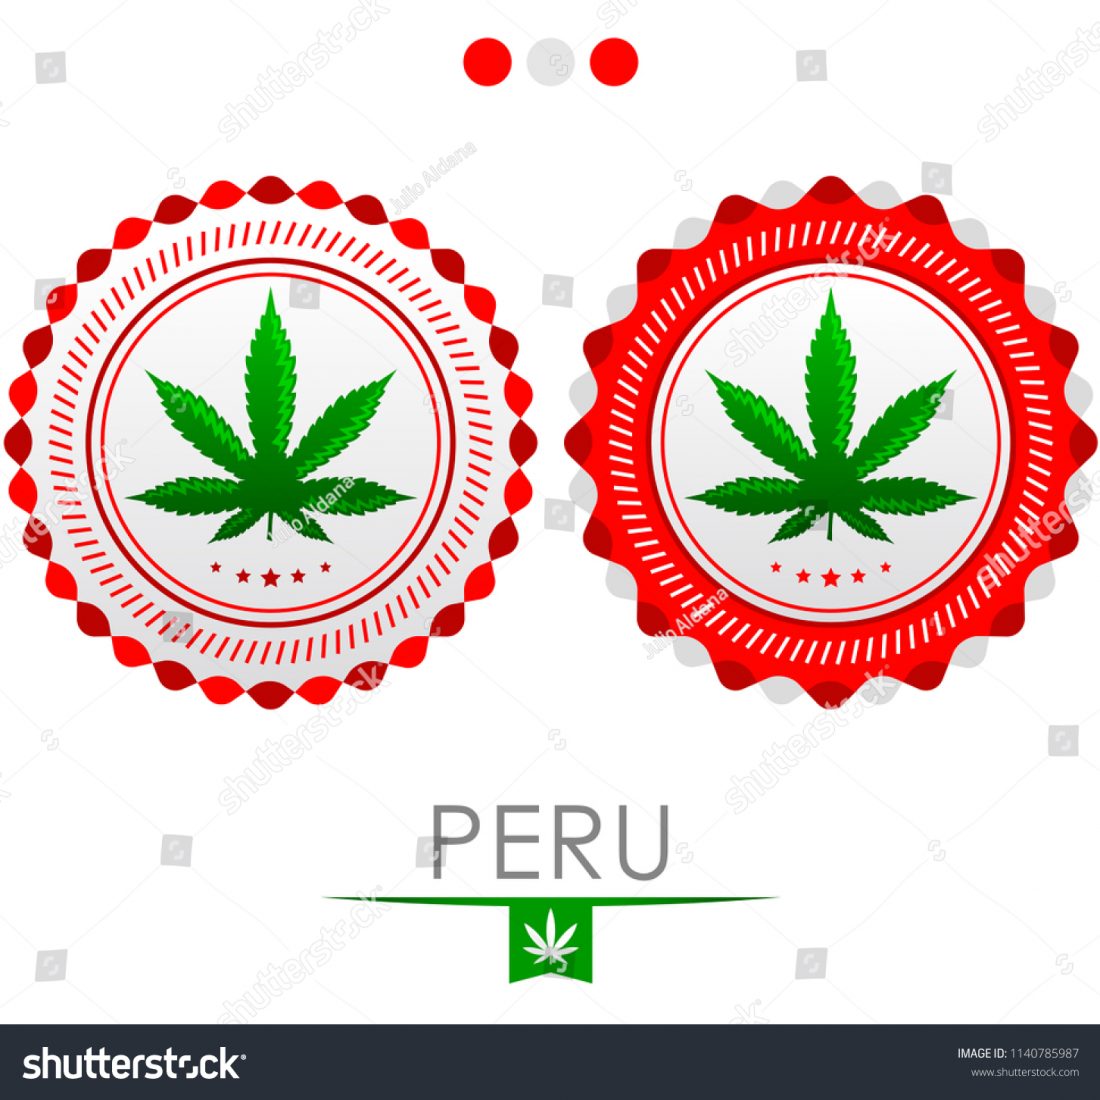 Where to Buy Marijuana in Peru Can you Bring Marijuana to Peru? Buy weed Online in Peru How to Buy Weed Online in Peru Weed Delivery in Peru